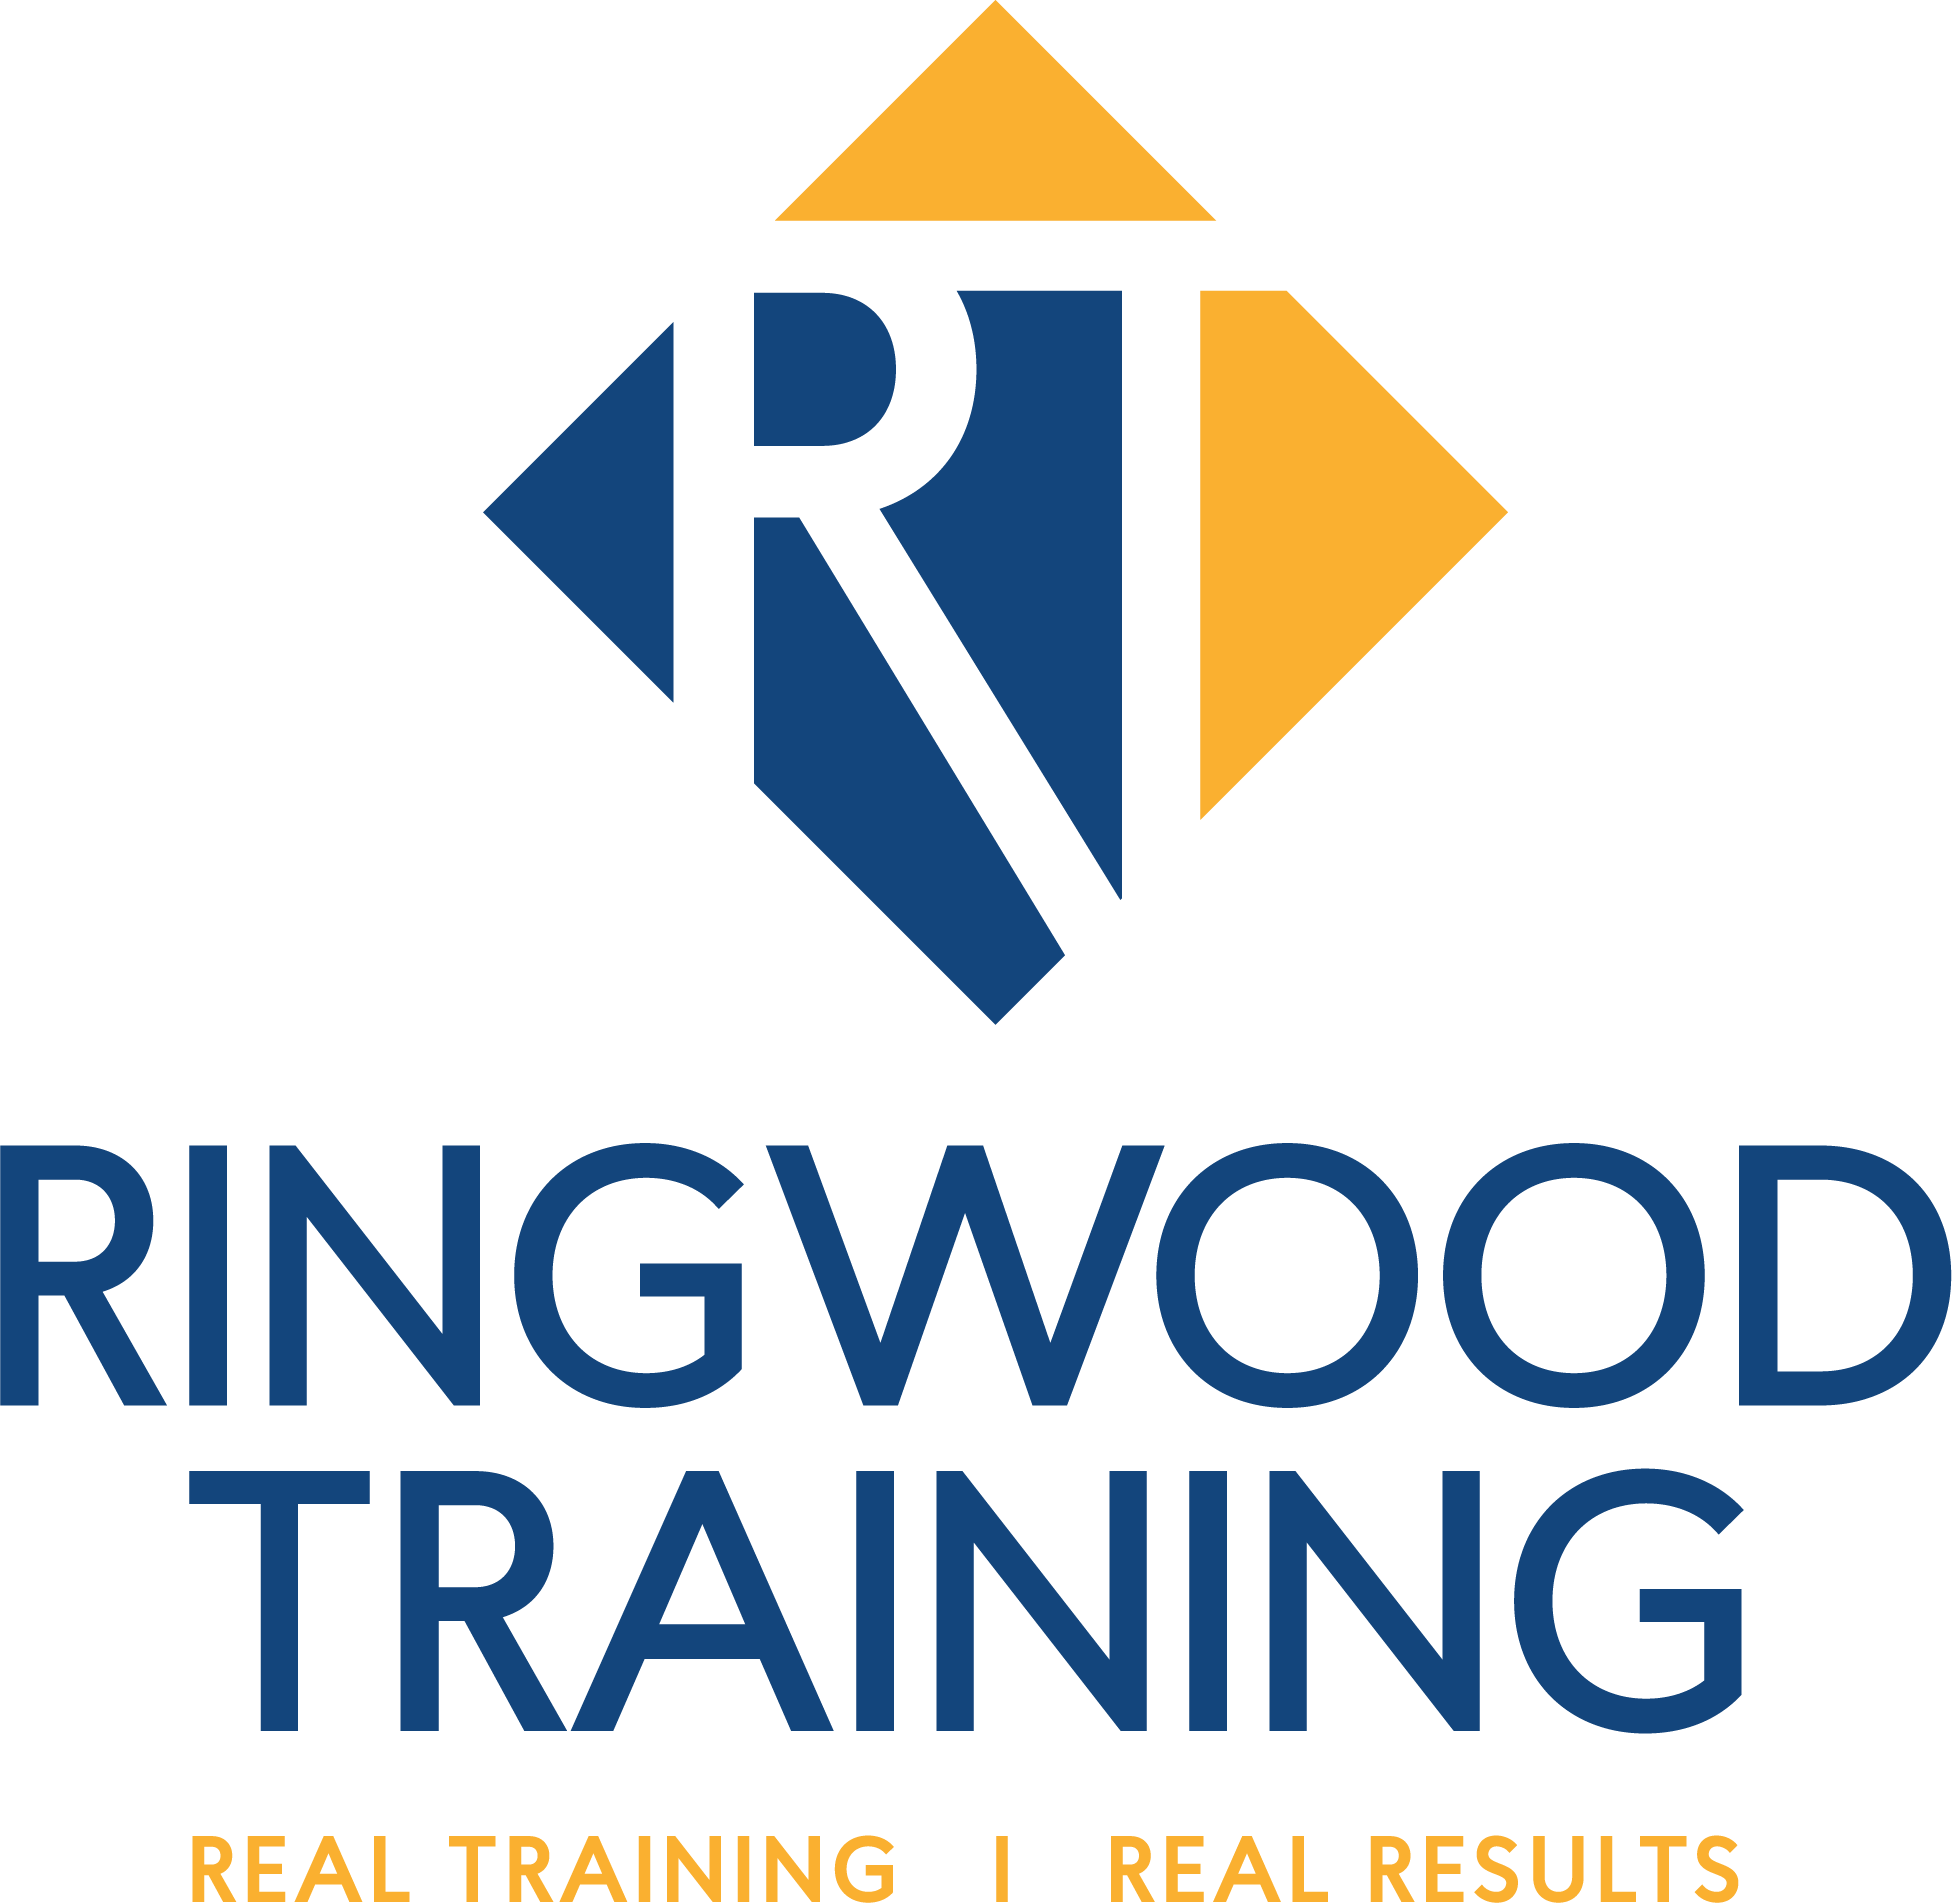 Ringwood Training